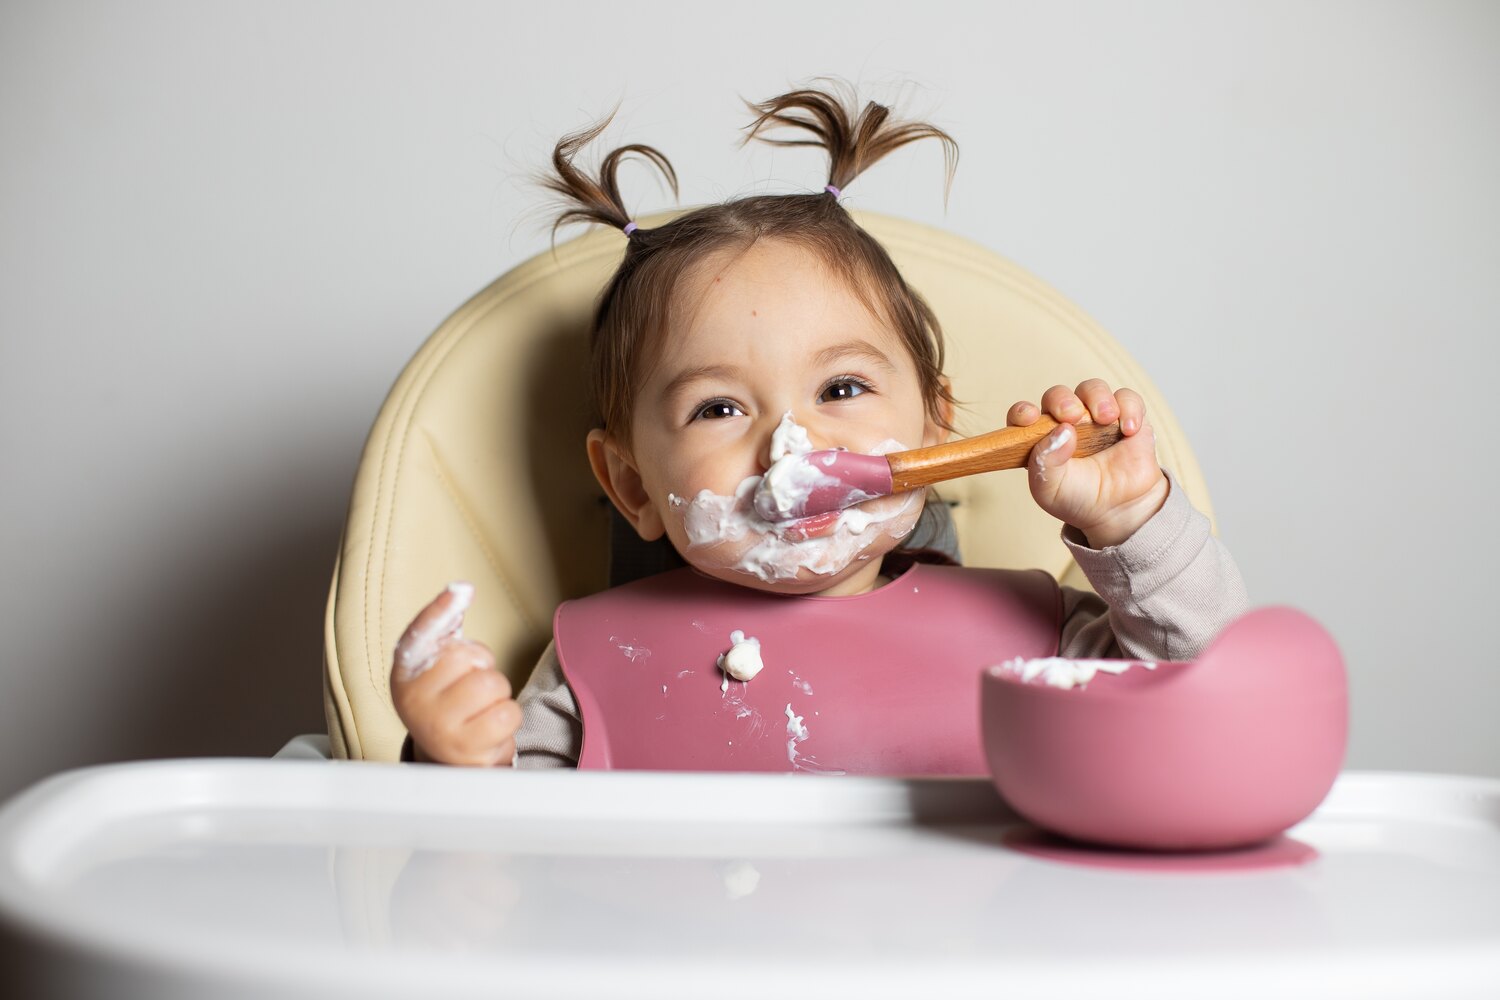 A toddler eating yogurt, a superfood